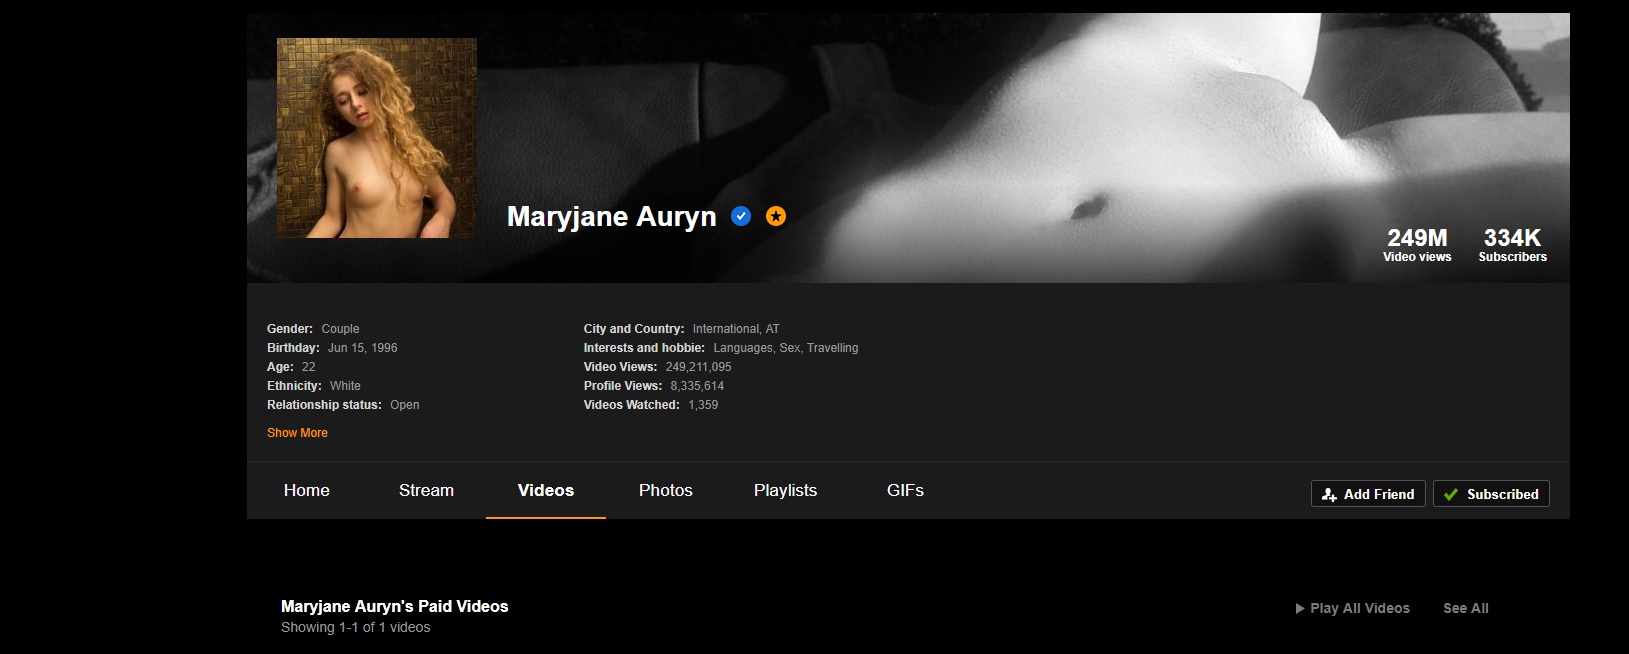 What happened to maryjane auryn